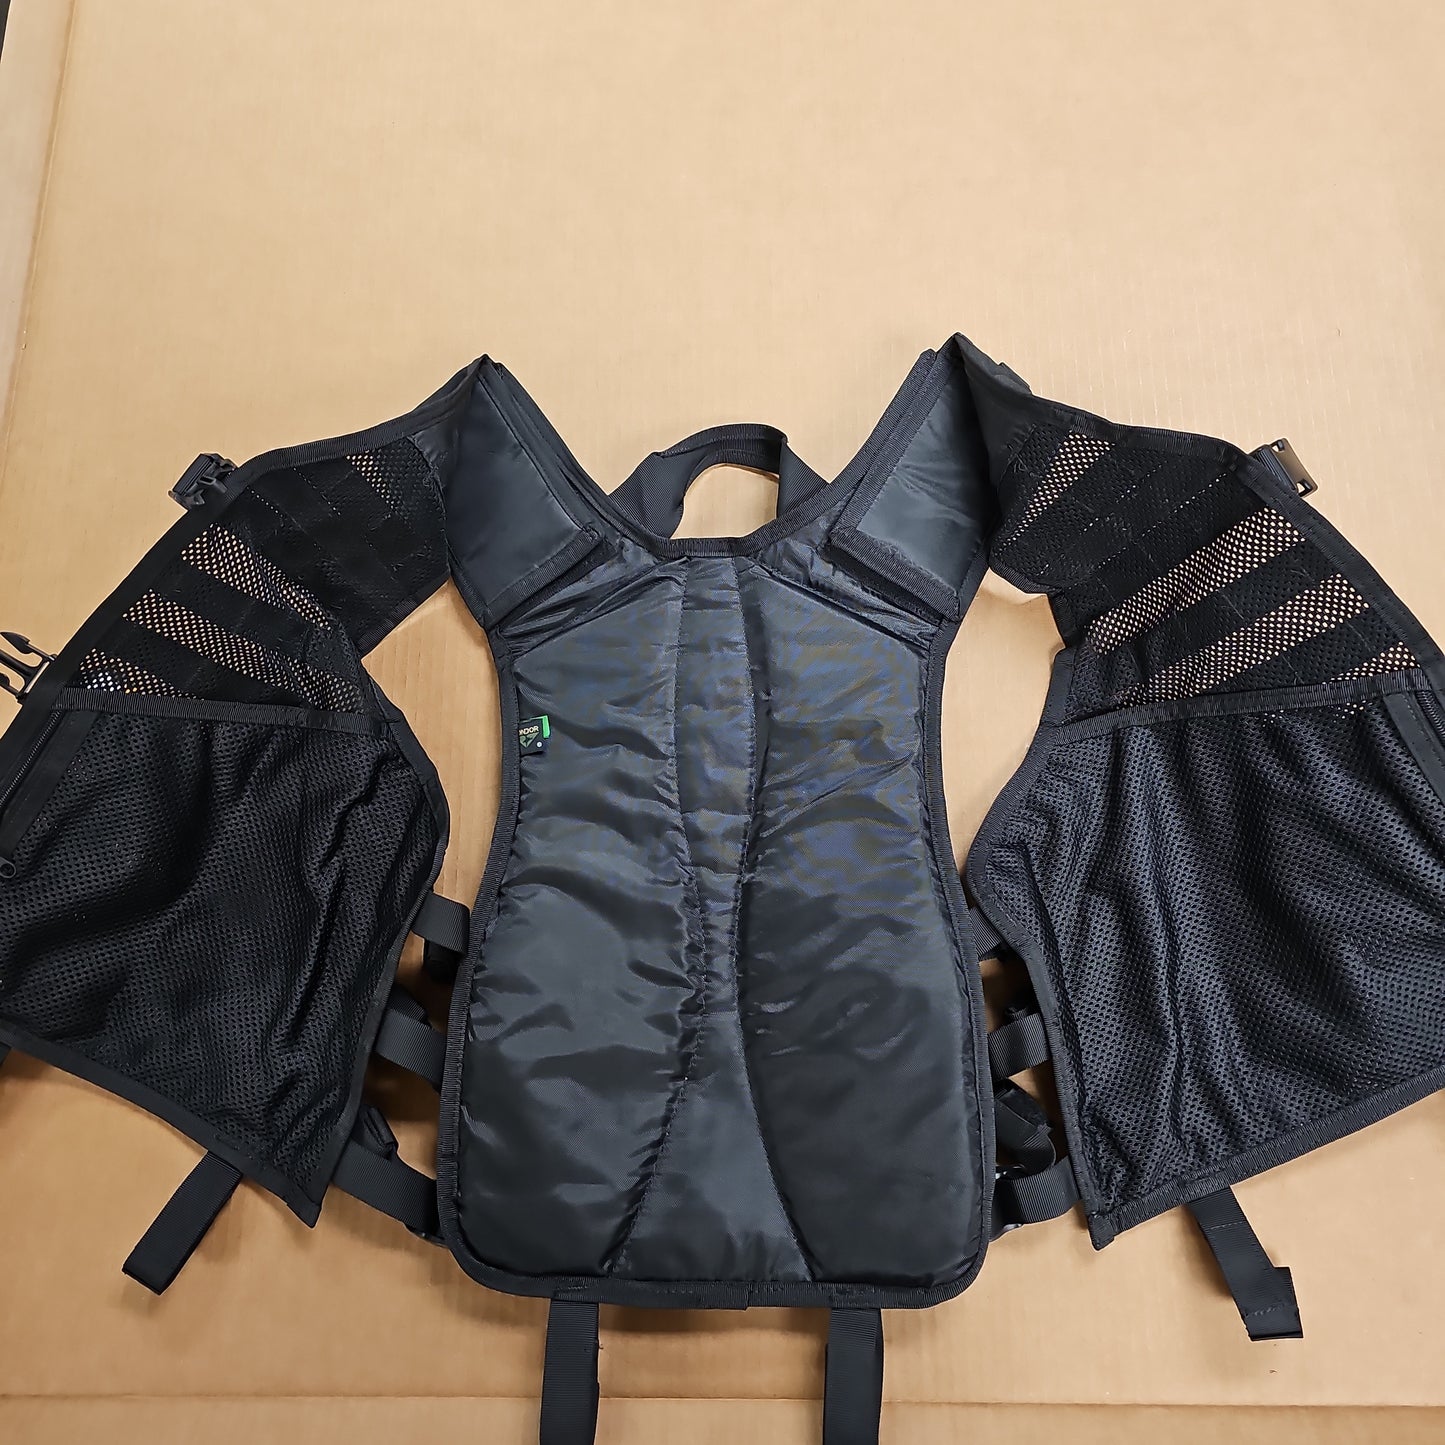 Mesh Hydration Vest: Black, One Size MHV-002